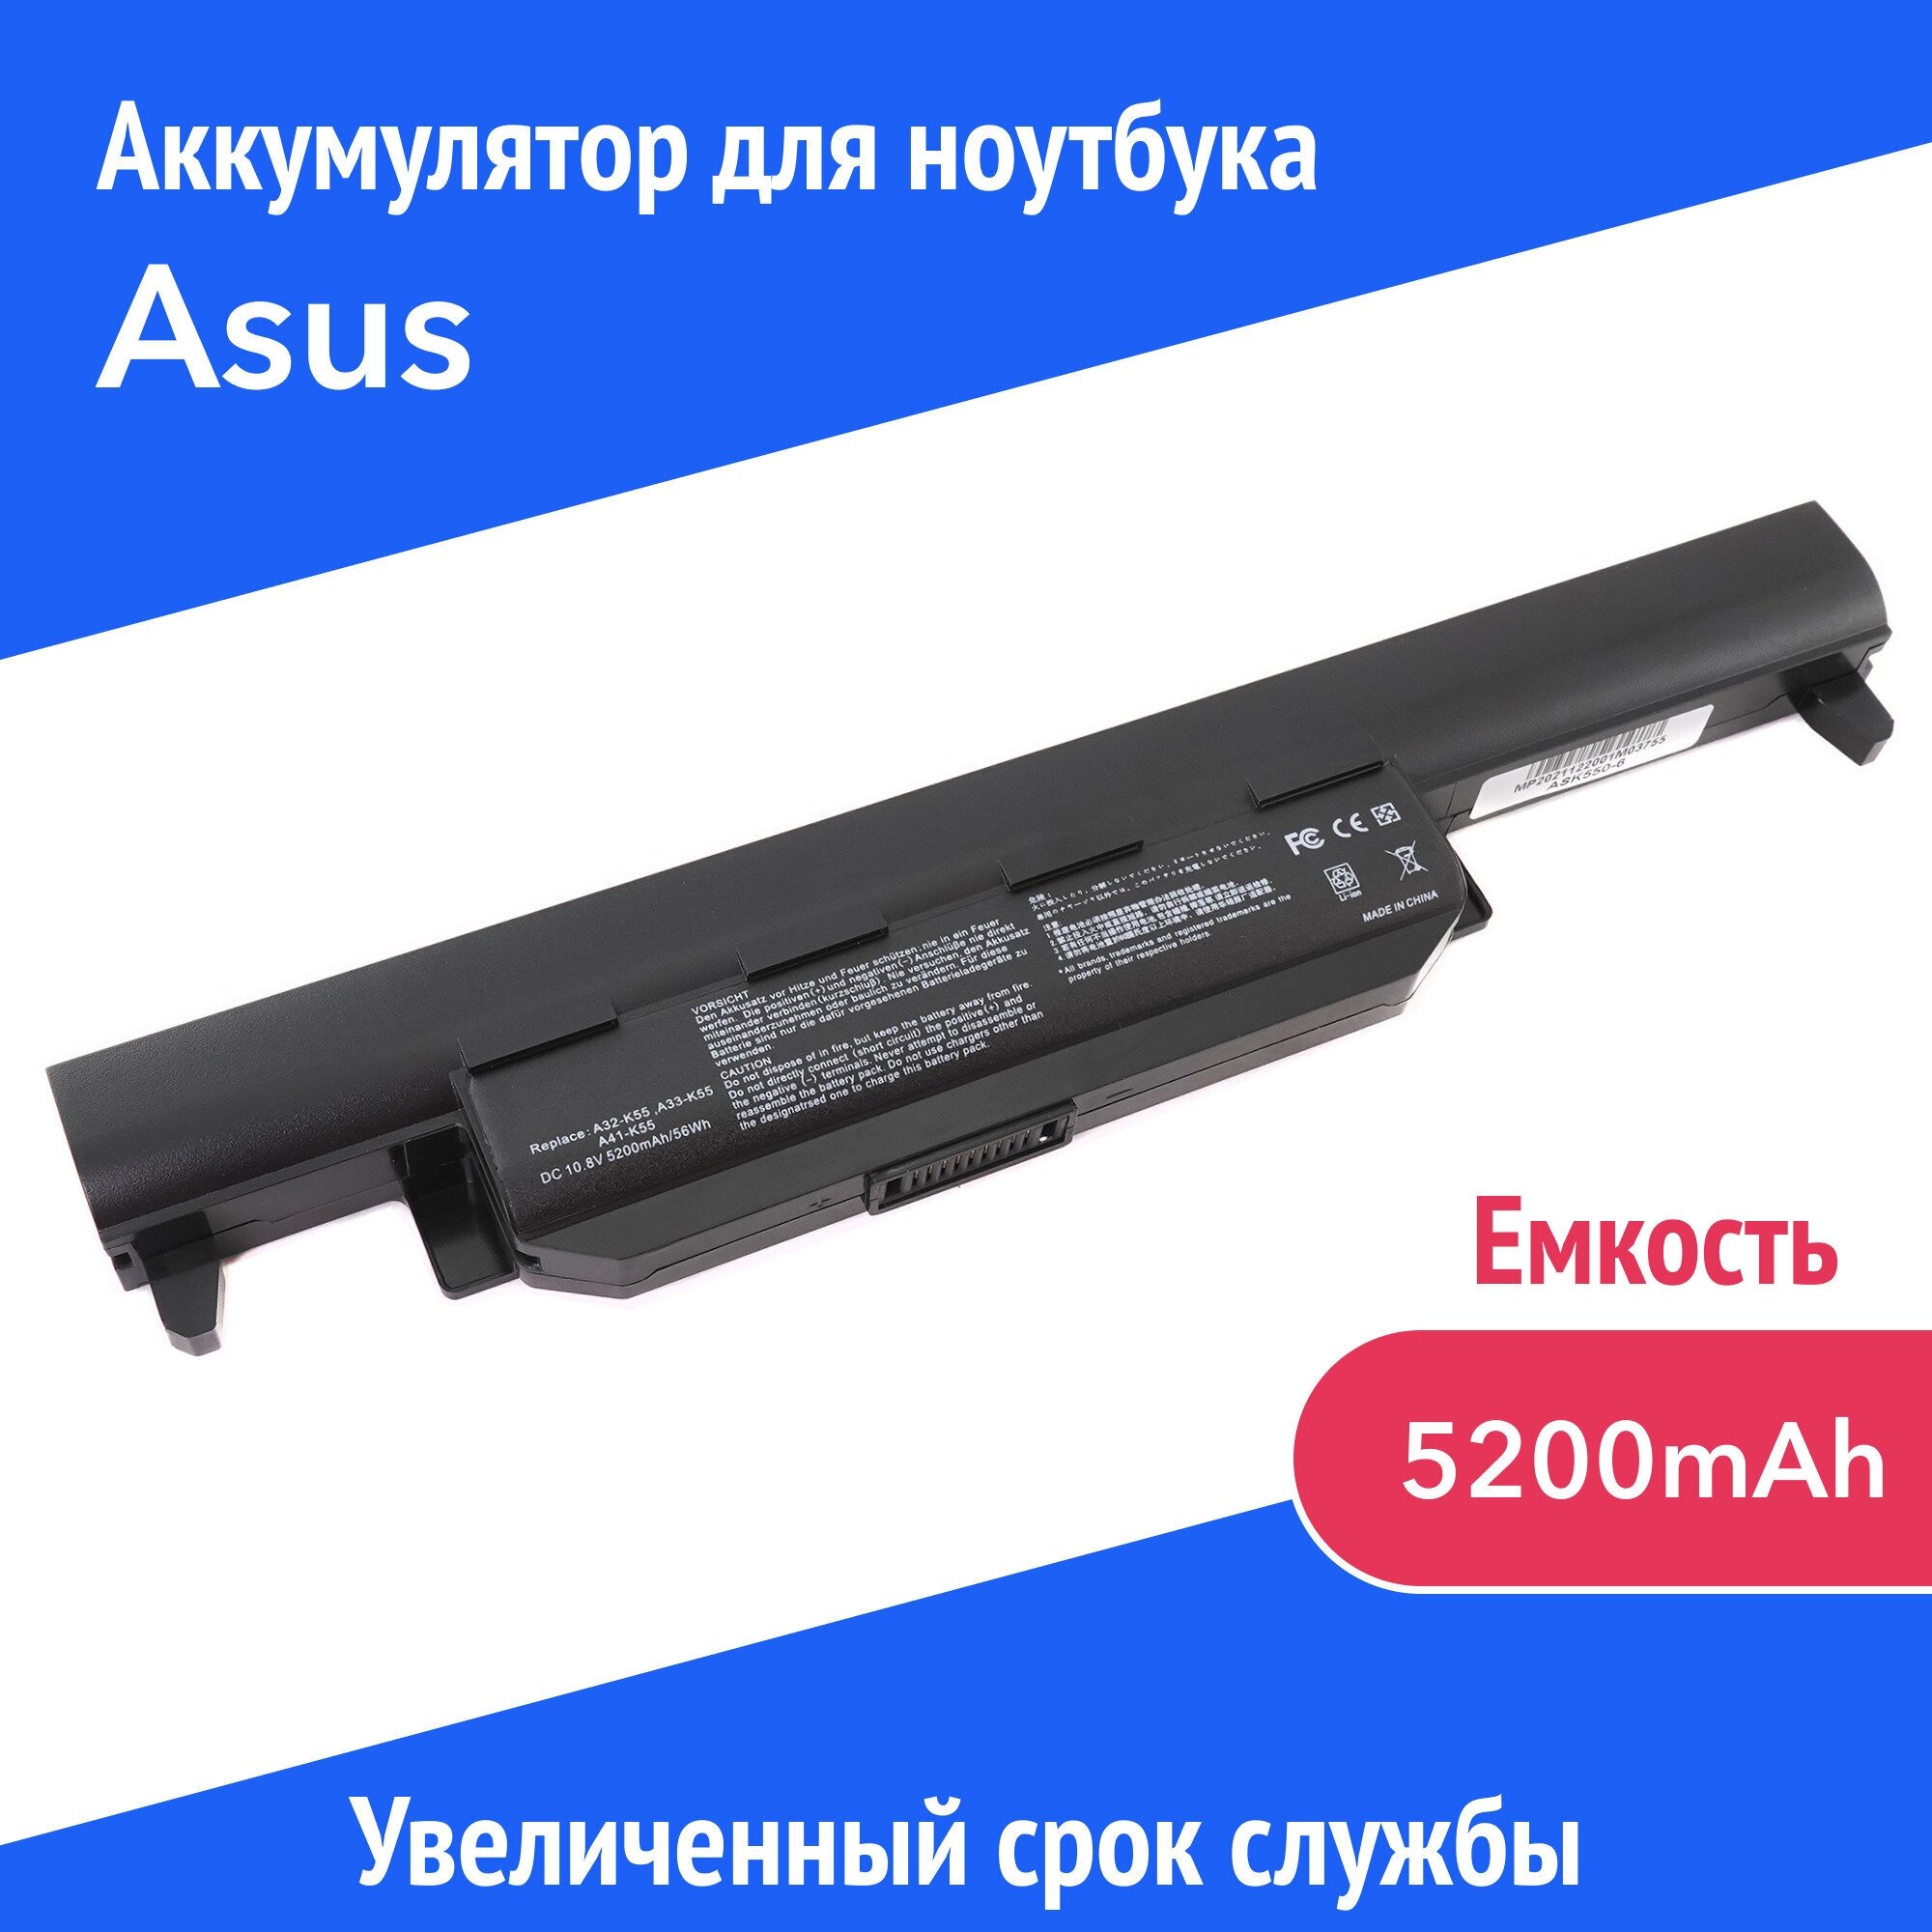 Аккумулятор A32-K55 для Asus A45D / A45N / A55A / A75D / K45D / K55D / X55A (A33-K55, A41-K55) 5200mAh